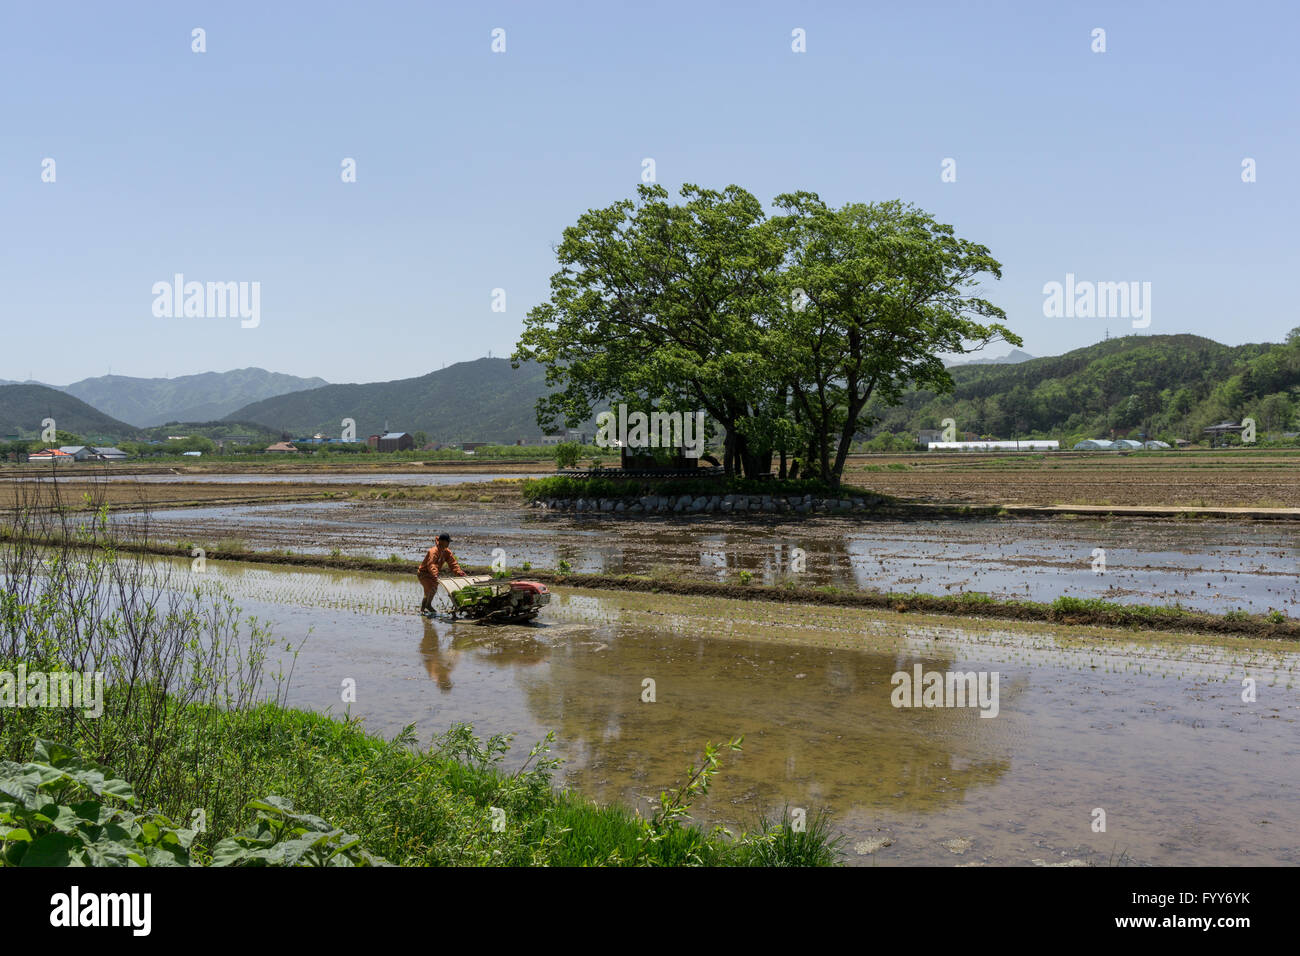 rice farmer in countryside Stock Photo